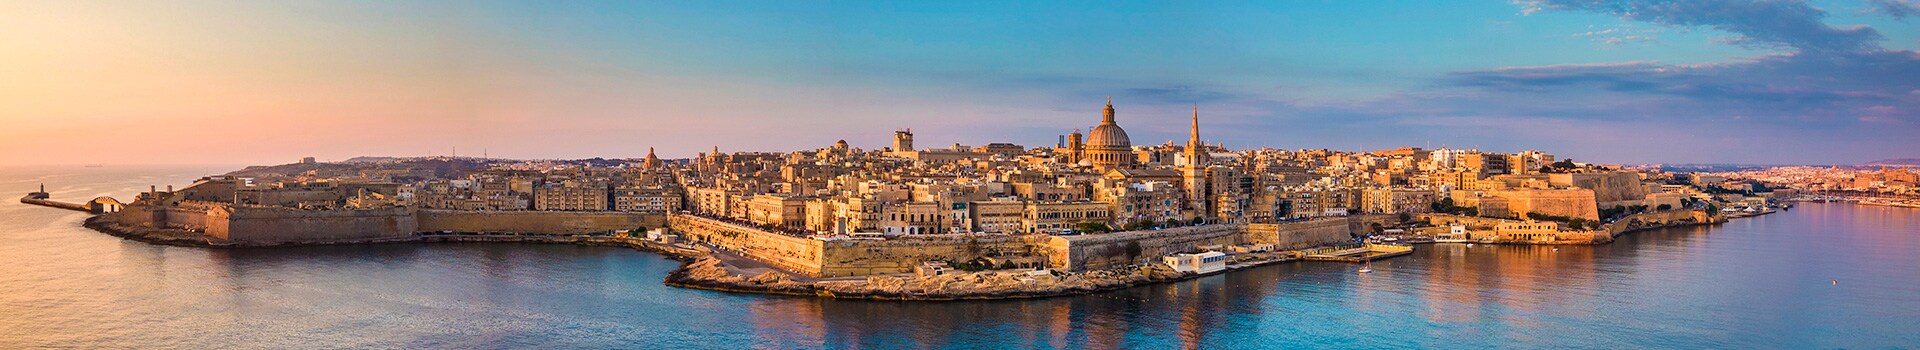 Ibiza - Malta